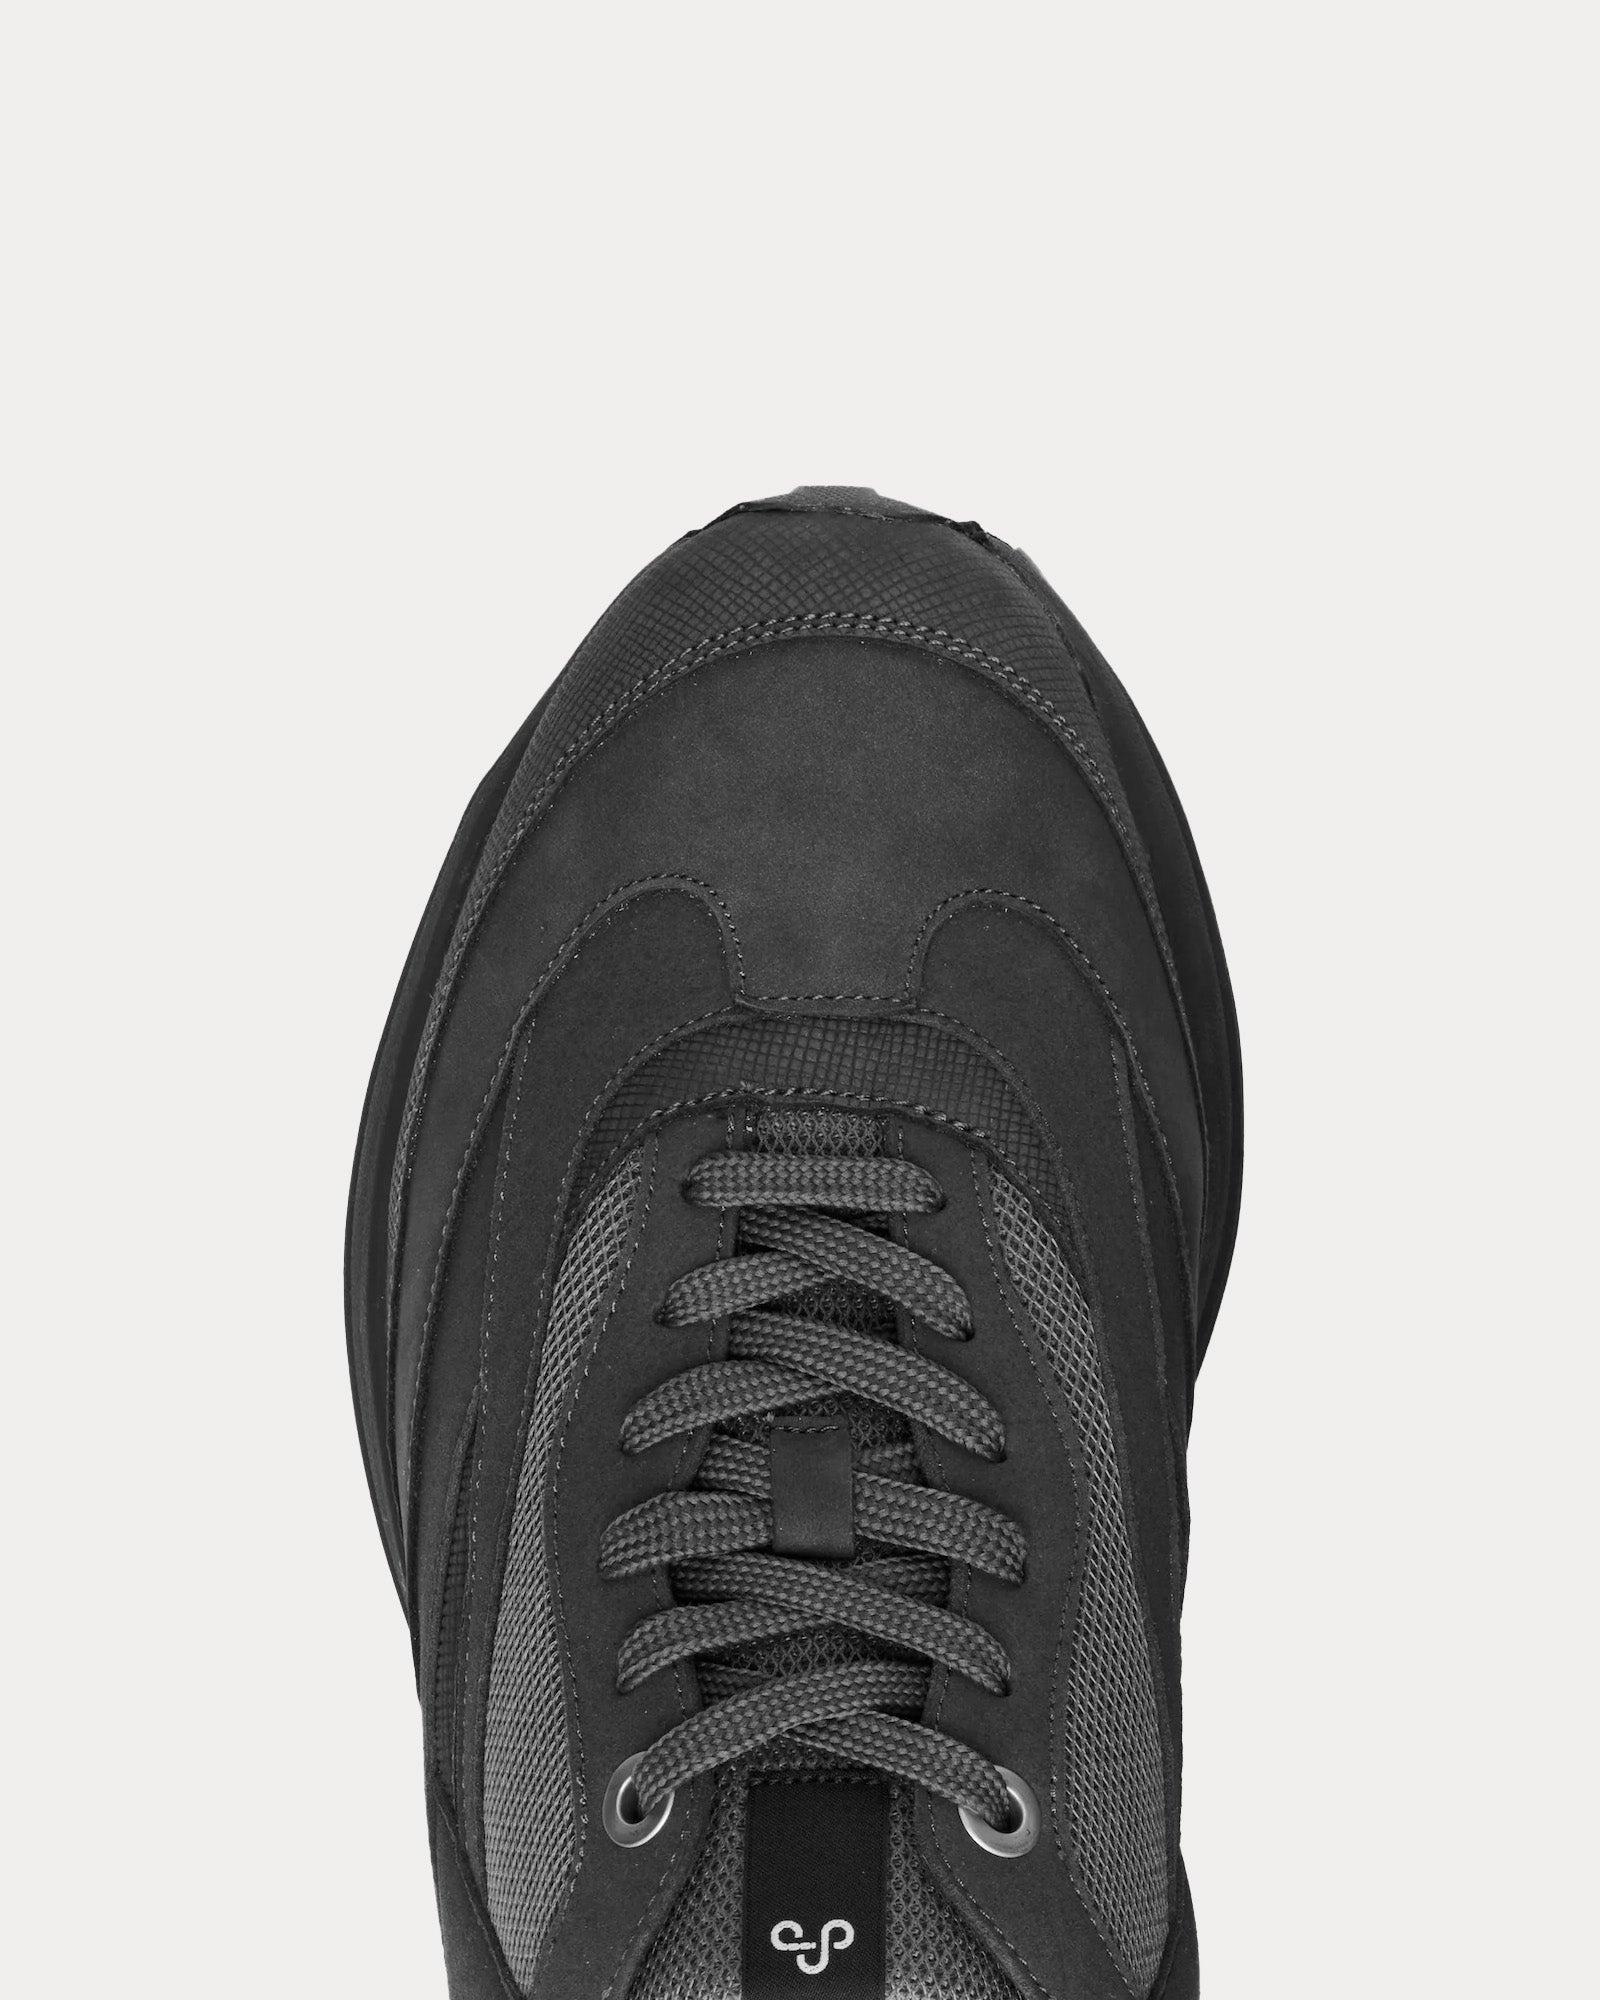 OAO - The Curve 1 Nubuck Grey Low Top Sneakers